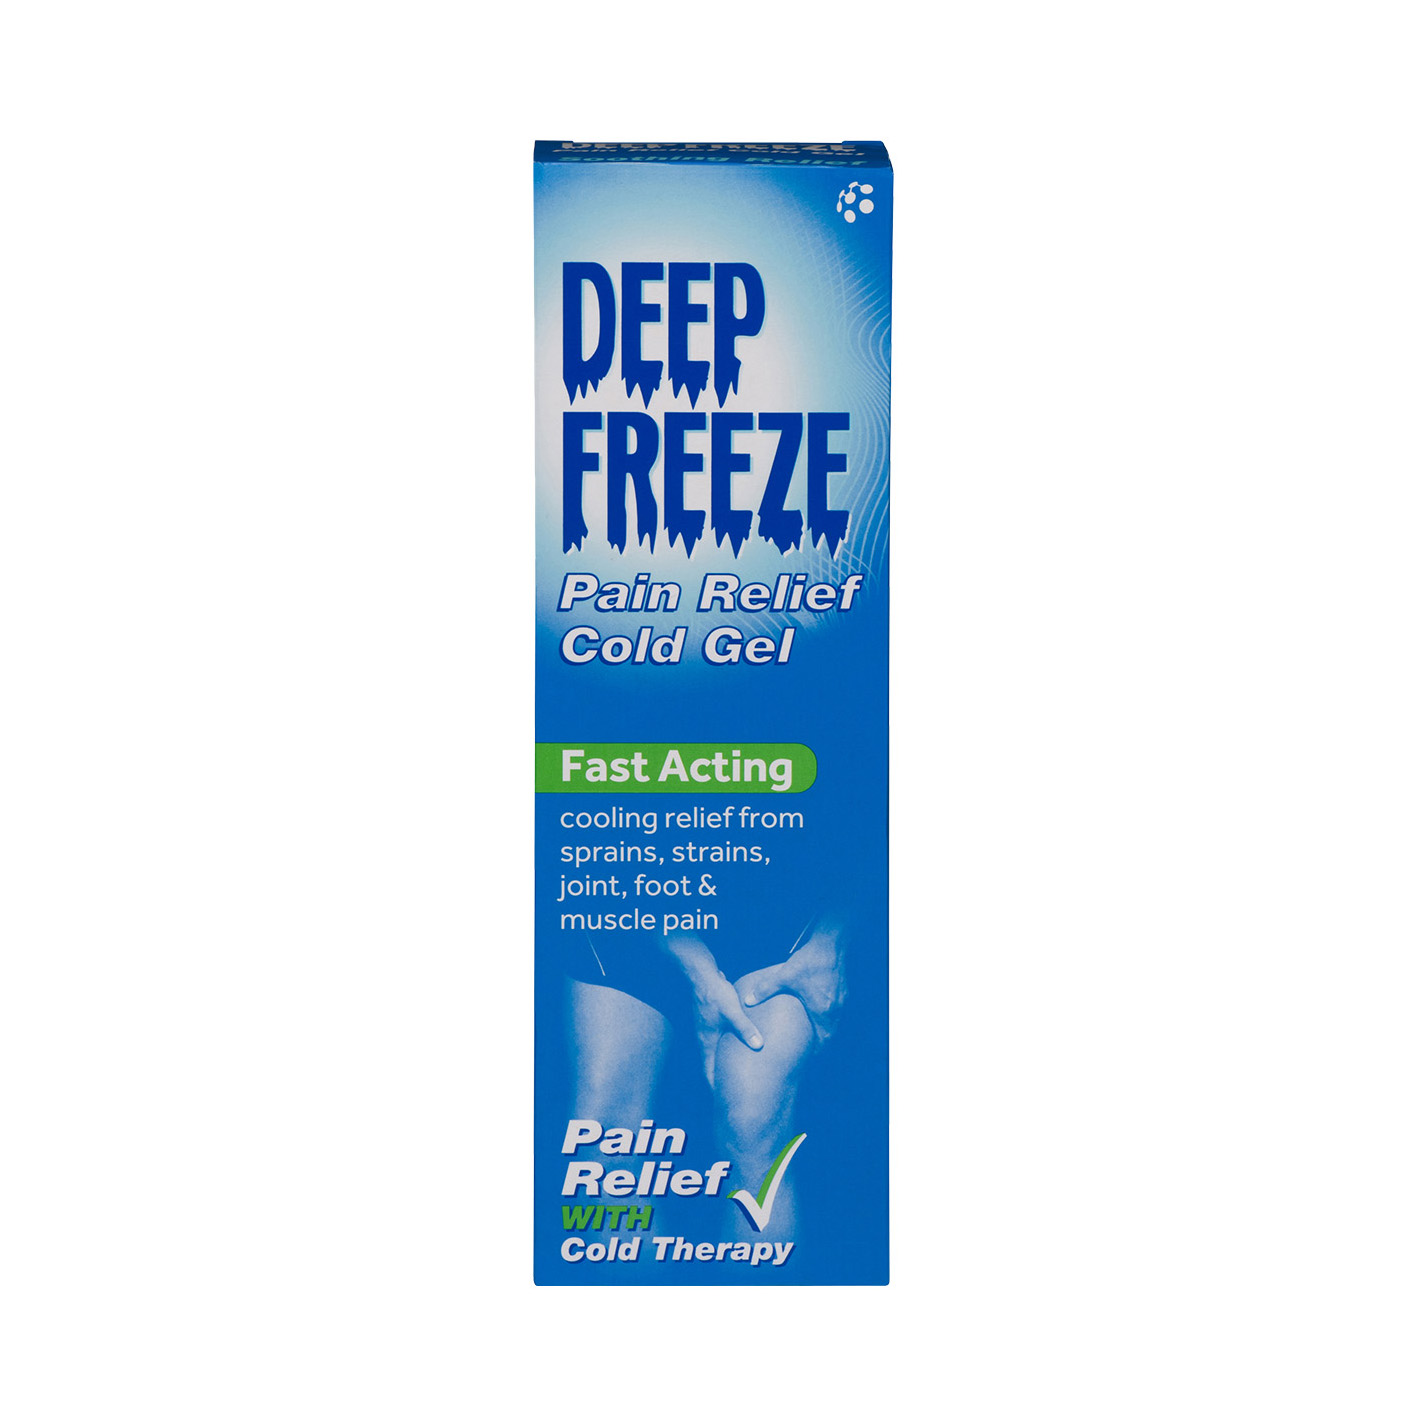 Deep freeze cold gel